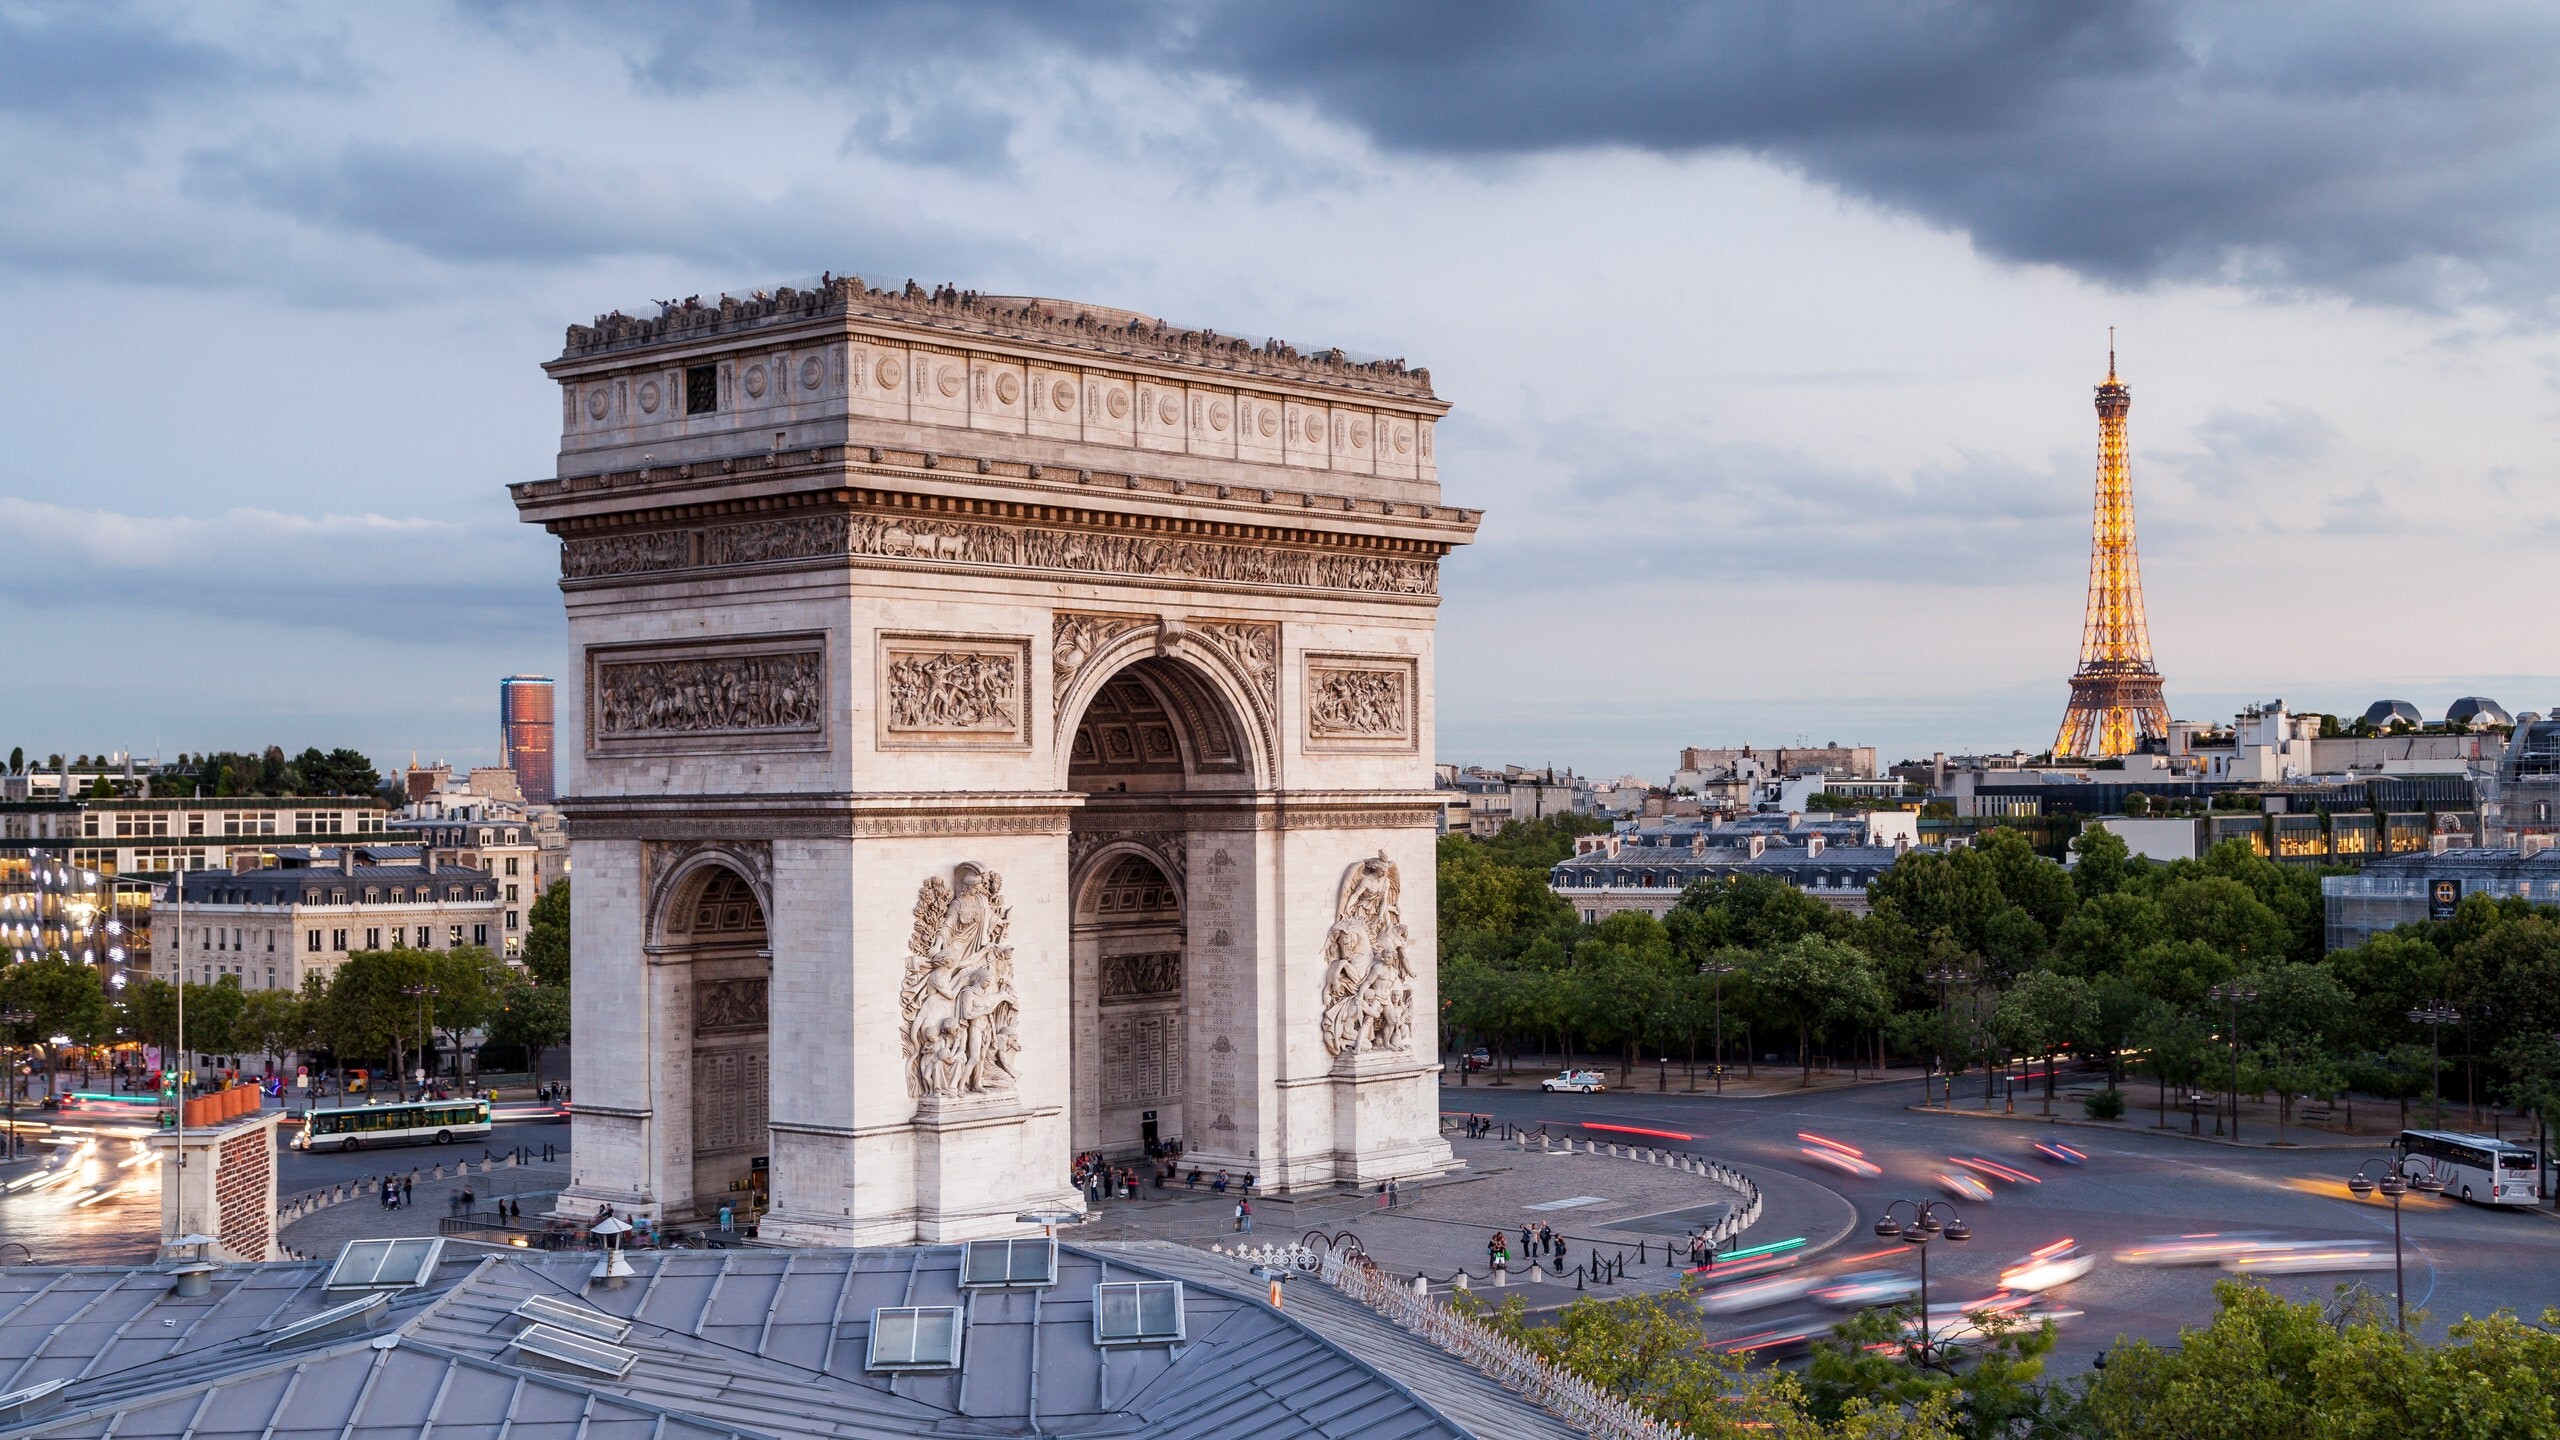 More information about "Ανώτερο όριο ταχύτητας τα 30χλμ/ώρα στο Παρίσι"